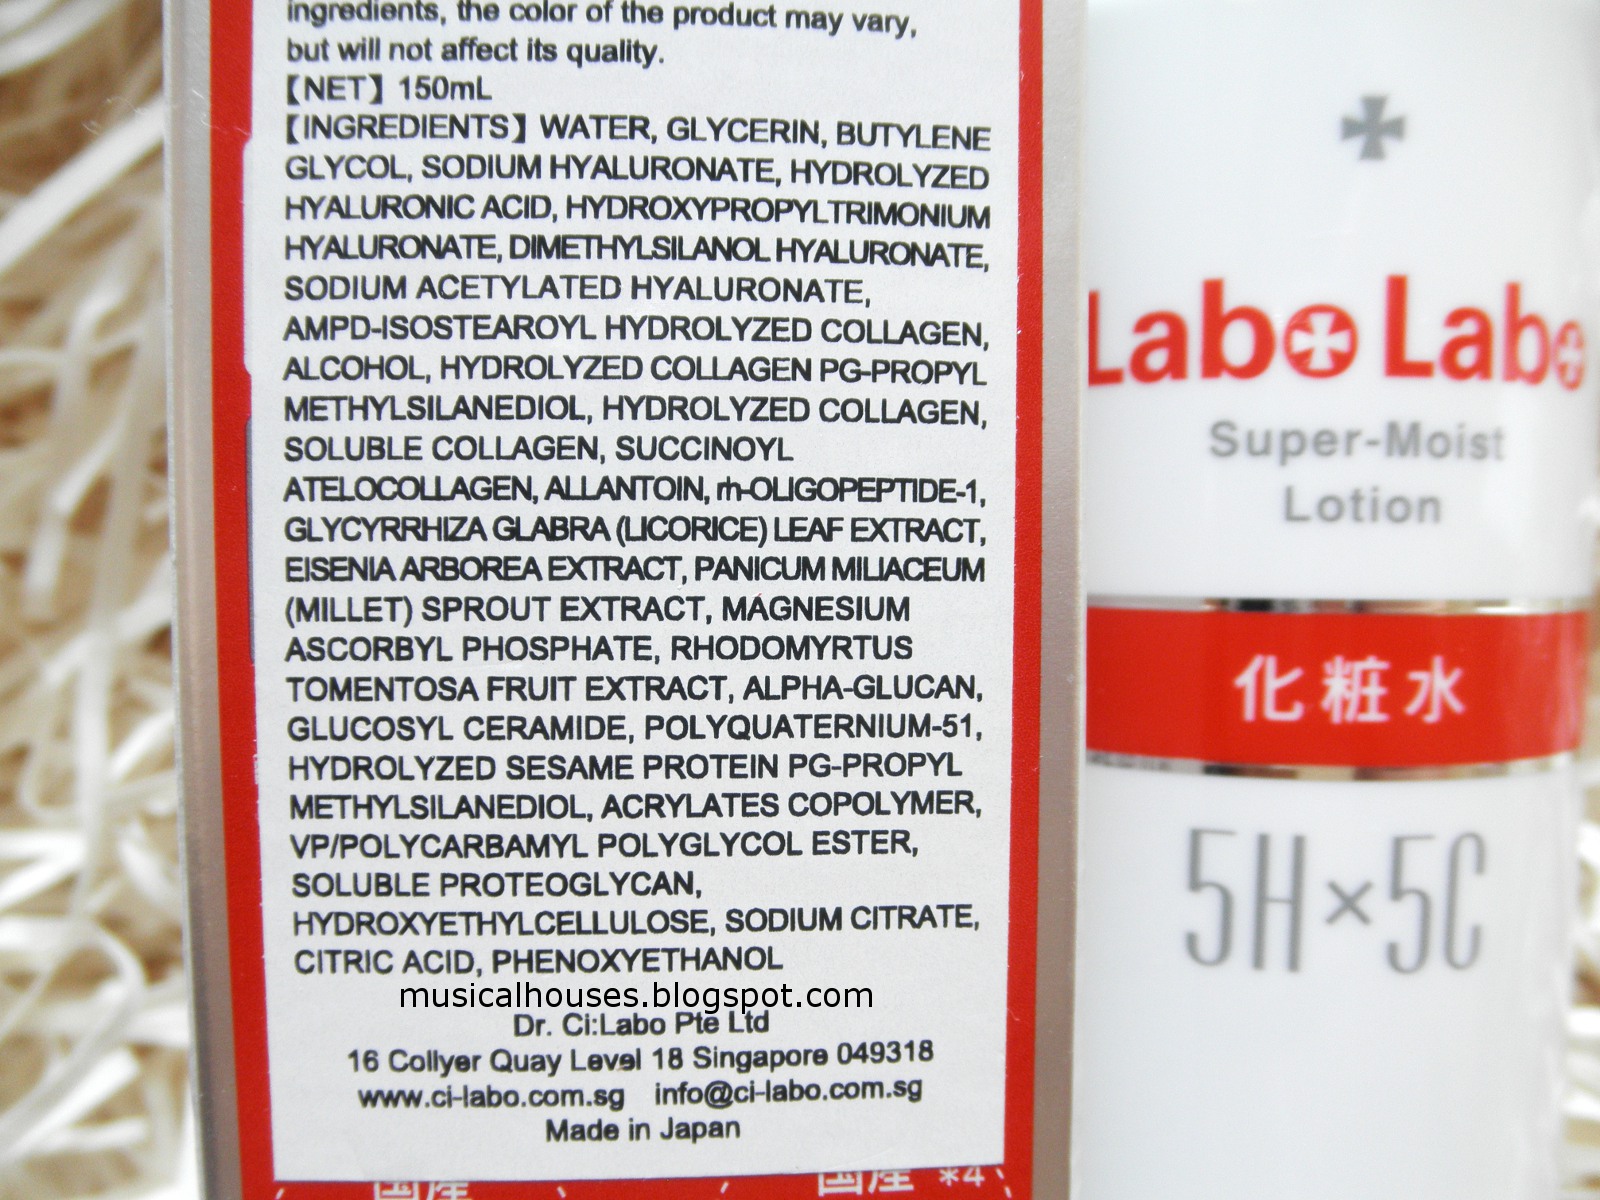 Labo Labo Super Moist 5H5C Lotion Ingredients Dr Ci Labo